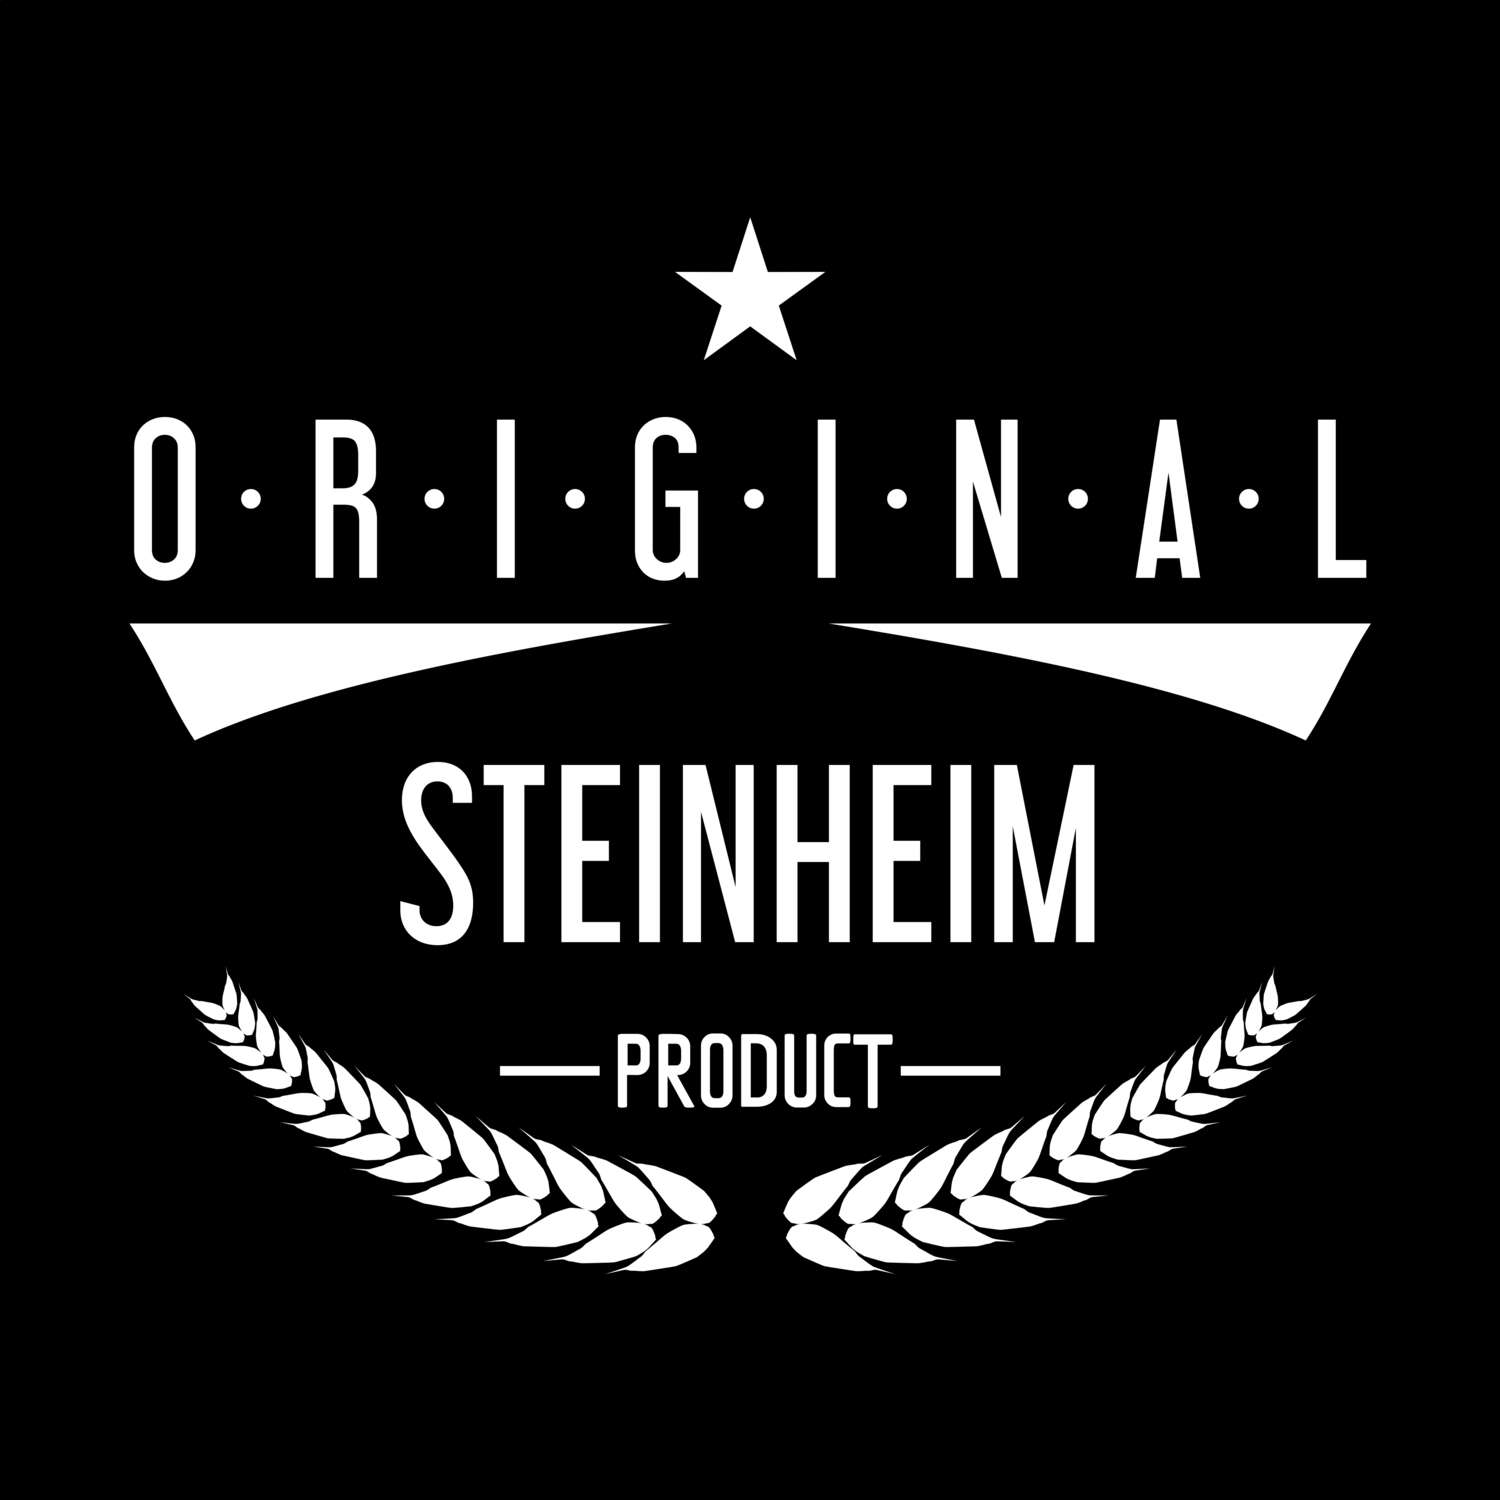 Steinheim T-Shirt »Original Product«